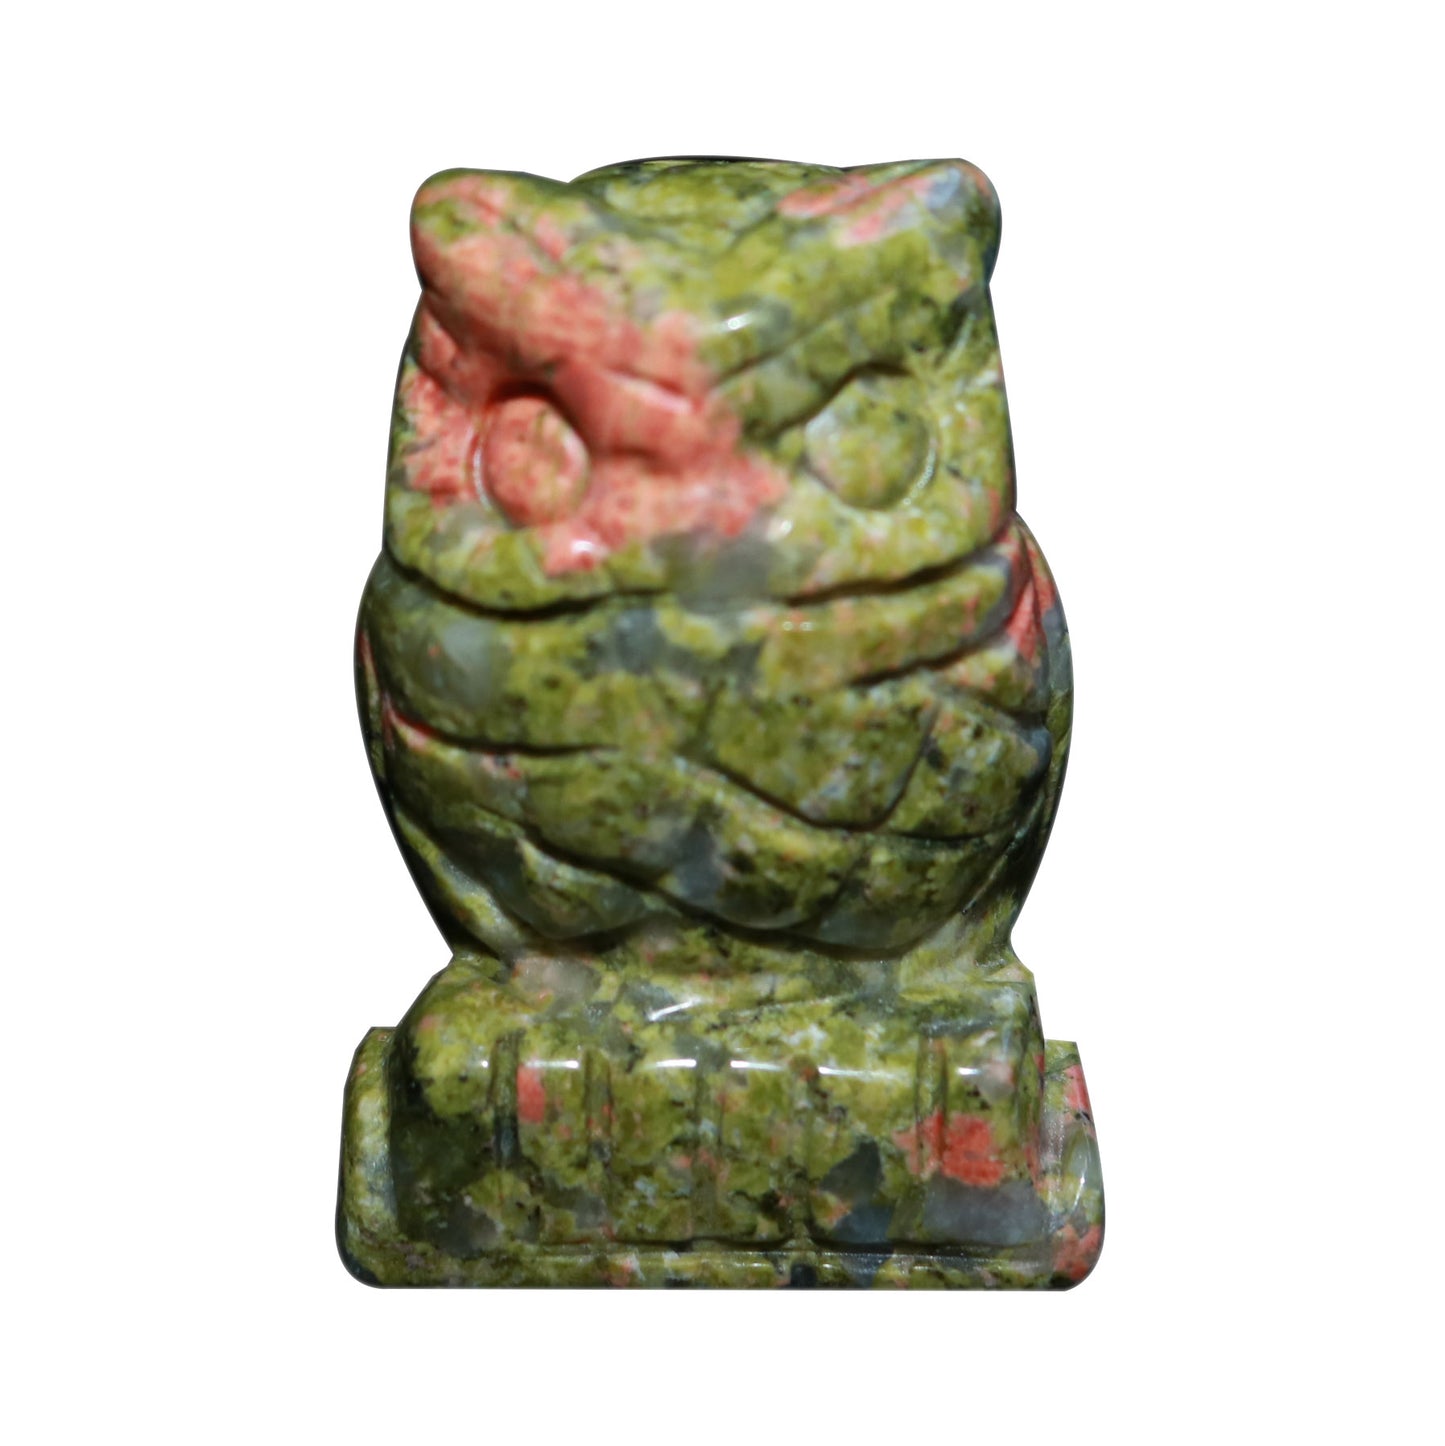 Owl Carvings 2 Inch